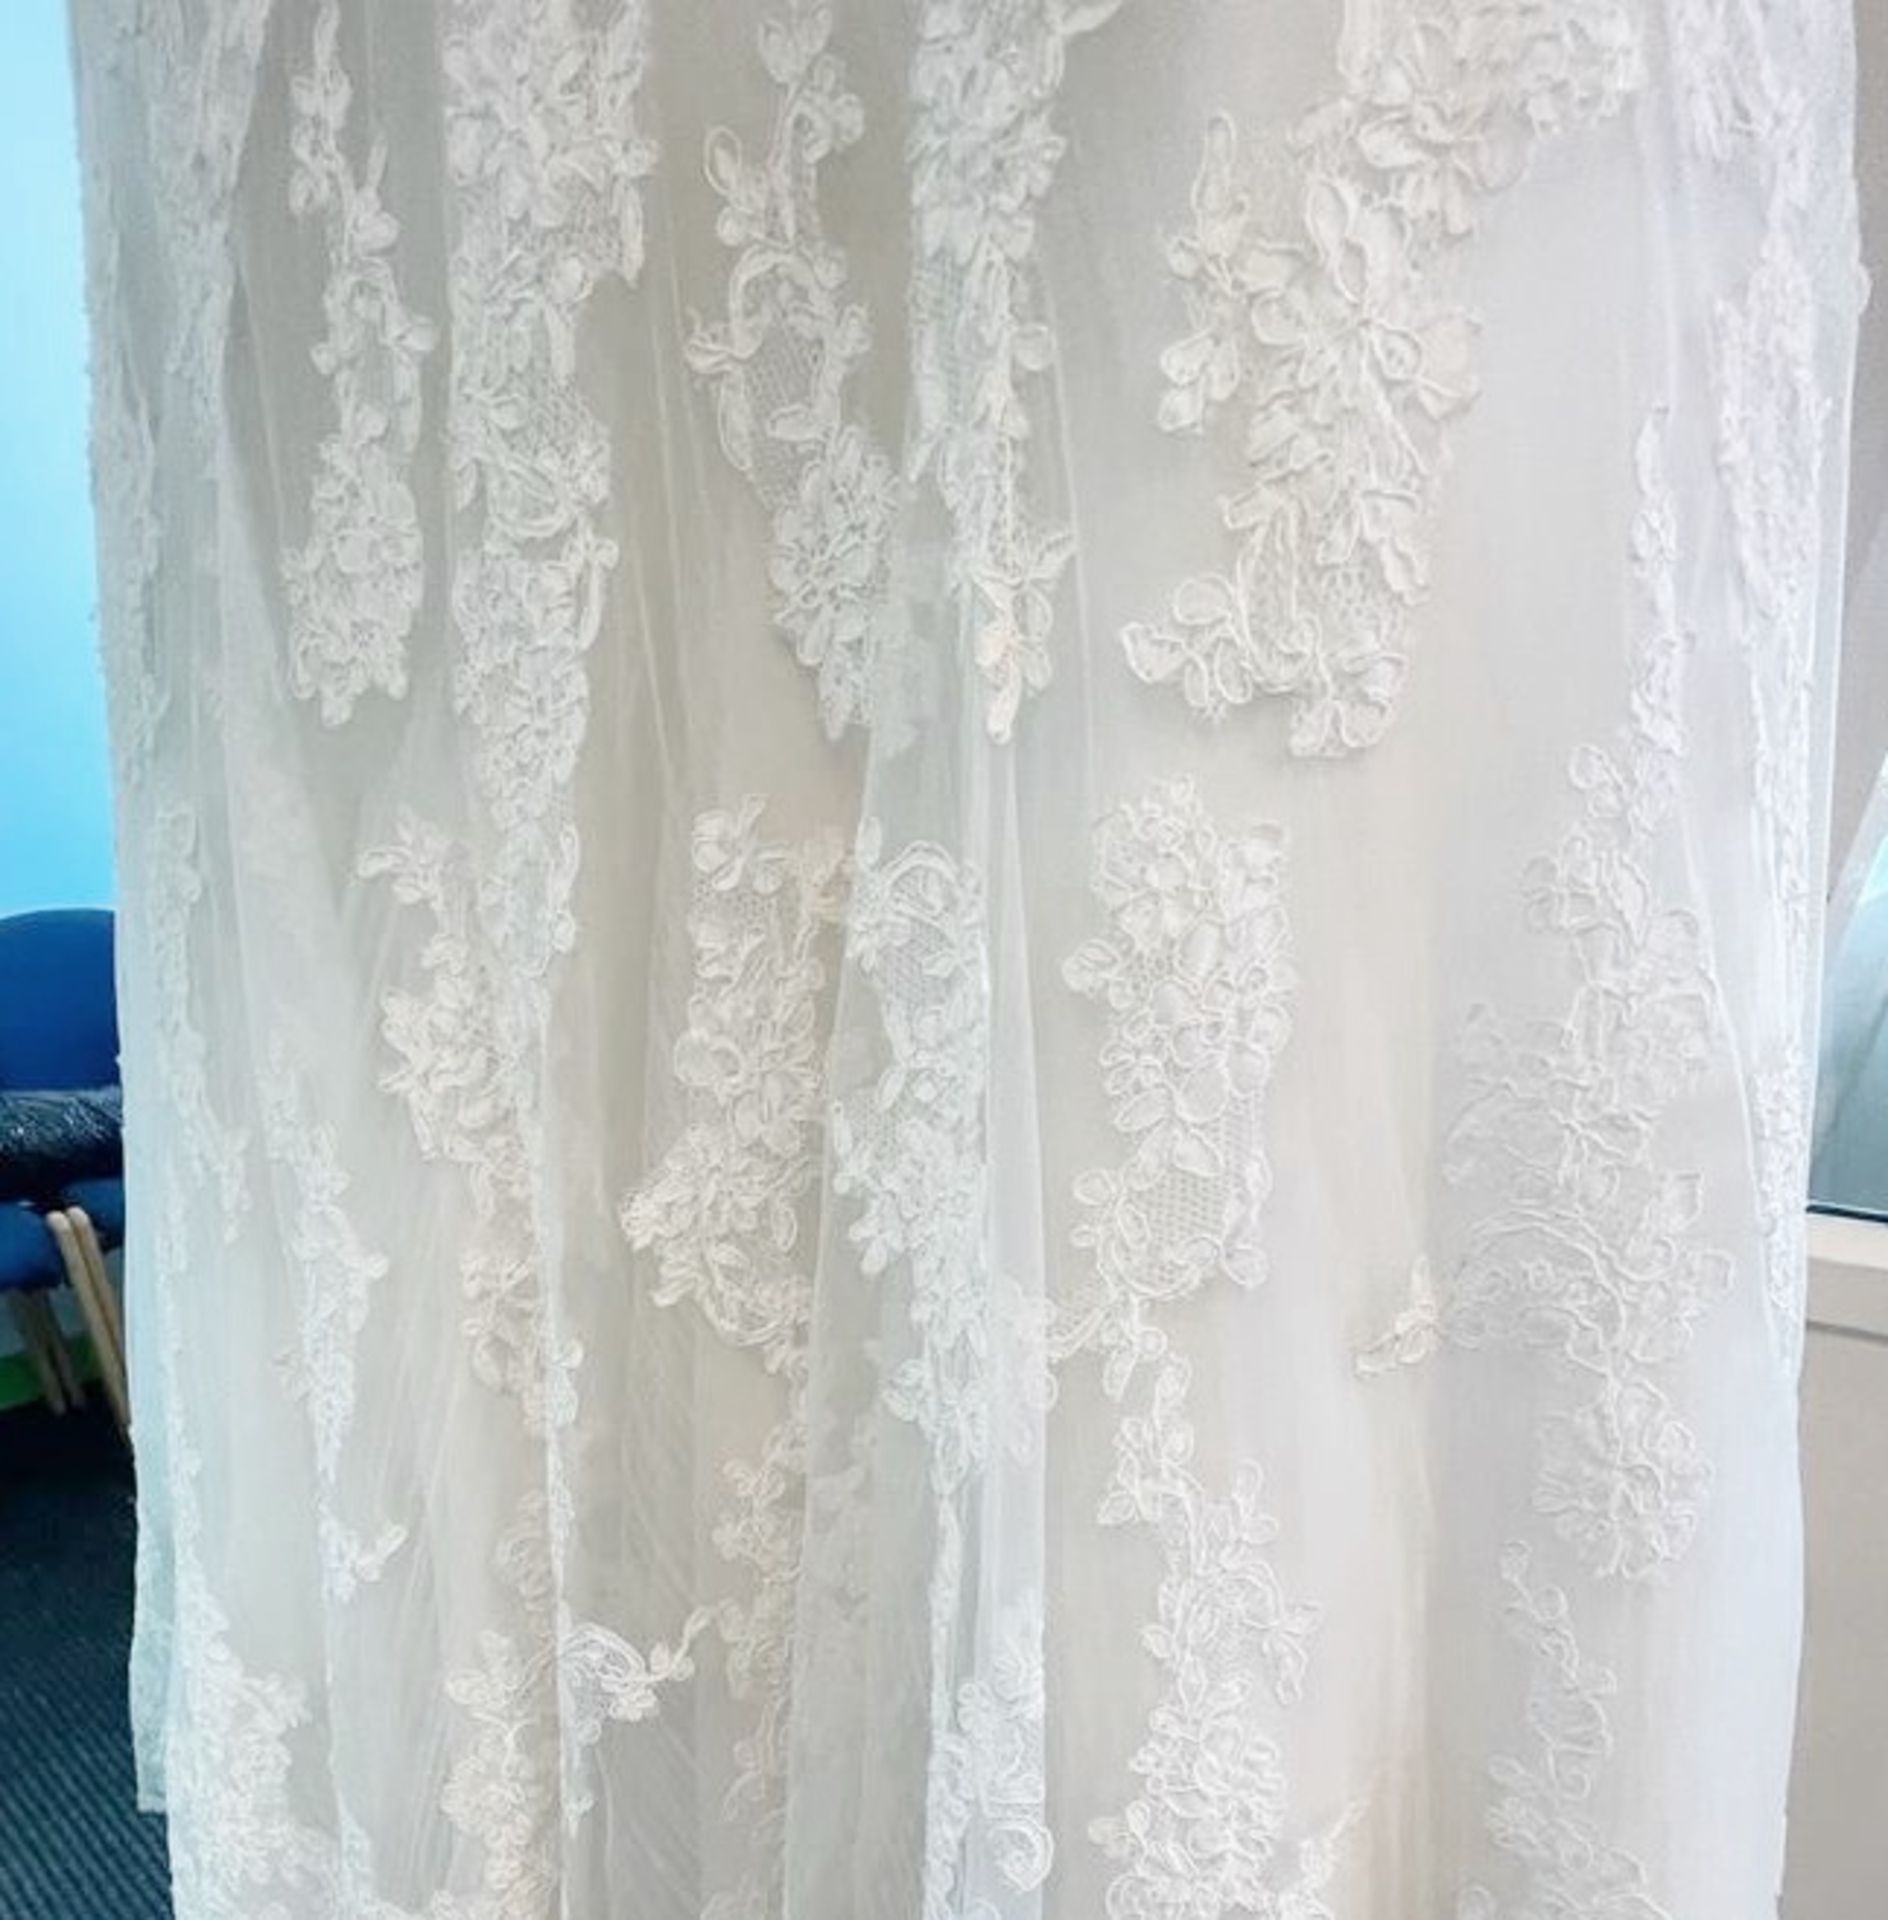 1 x PRONOVIAS 'Olugul' Strapless Mermaid Designer Wedding Dress Bridal Gown - Colour: Ivory - Image 8 of 10